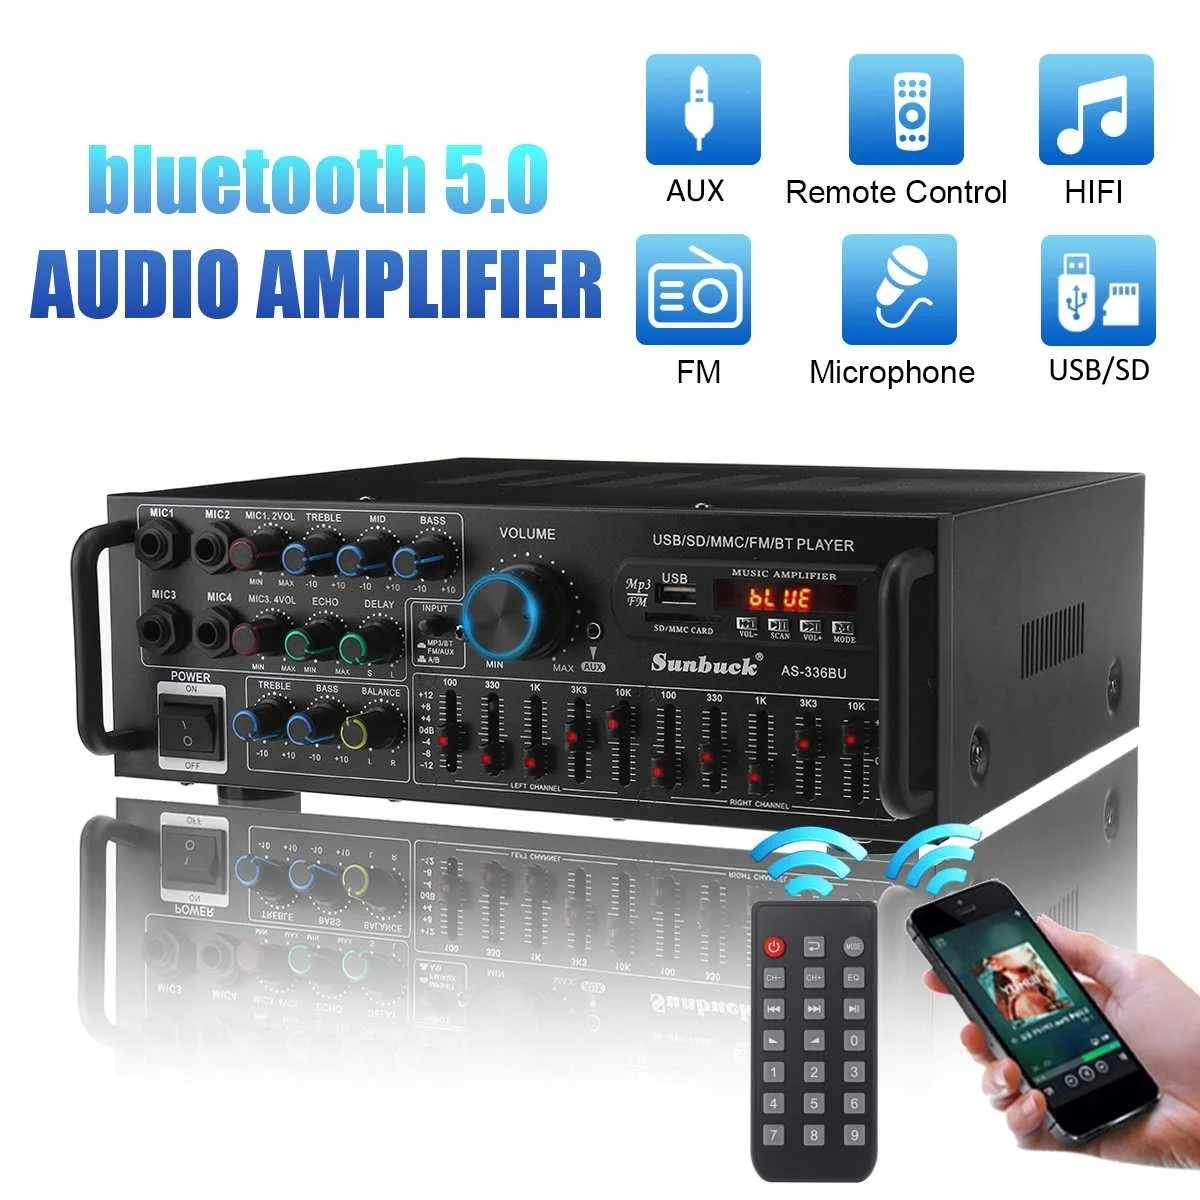 

Go 3000W bluetooth Stereo Amplifier Surround Sound USB SD AMP FM DVD AUX LCD Display Home Cinema Karaoke Remote Control